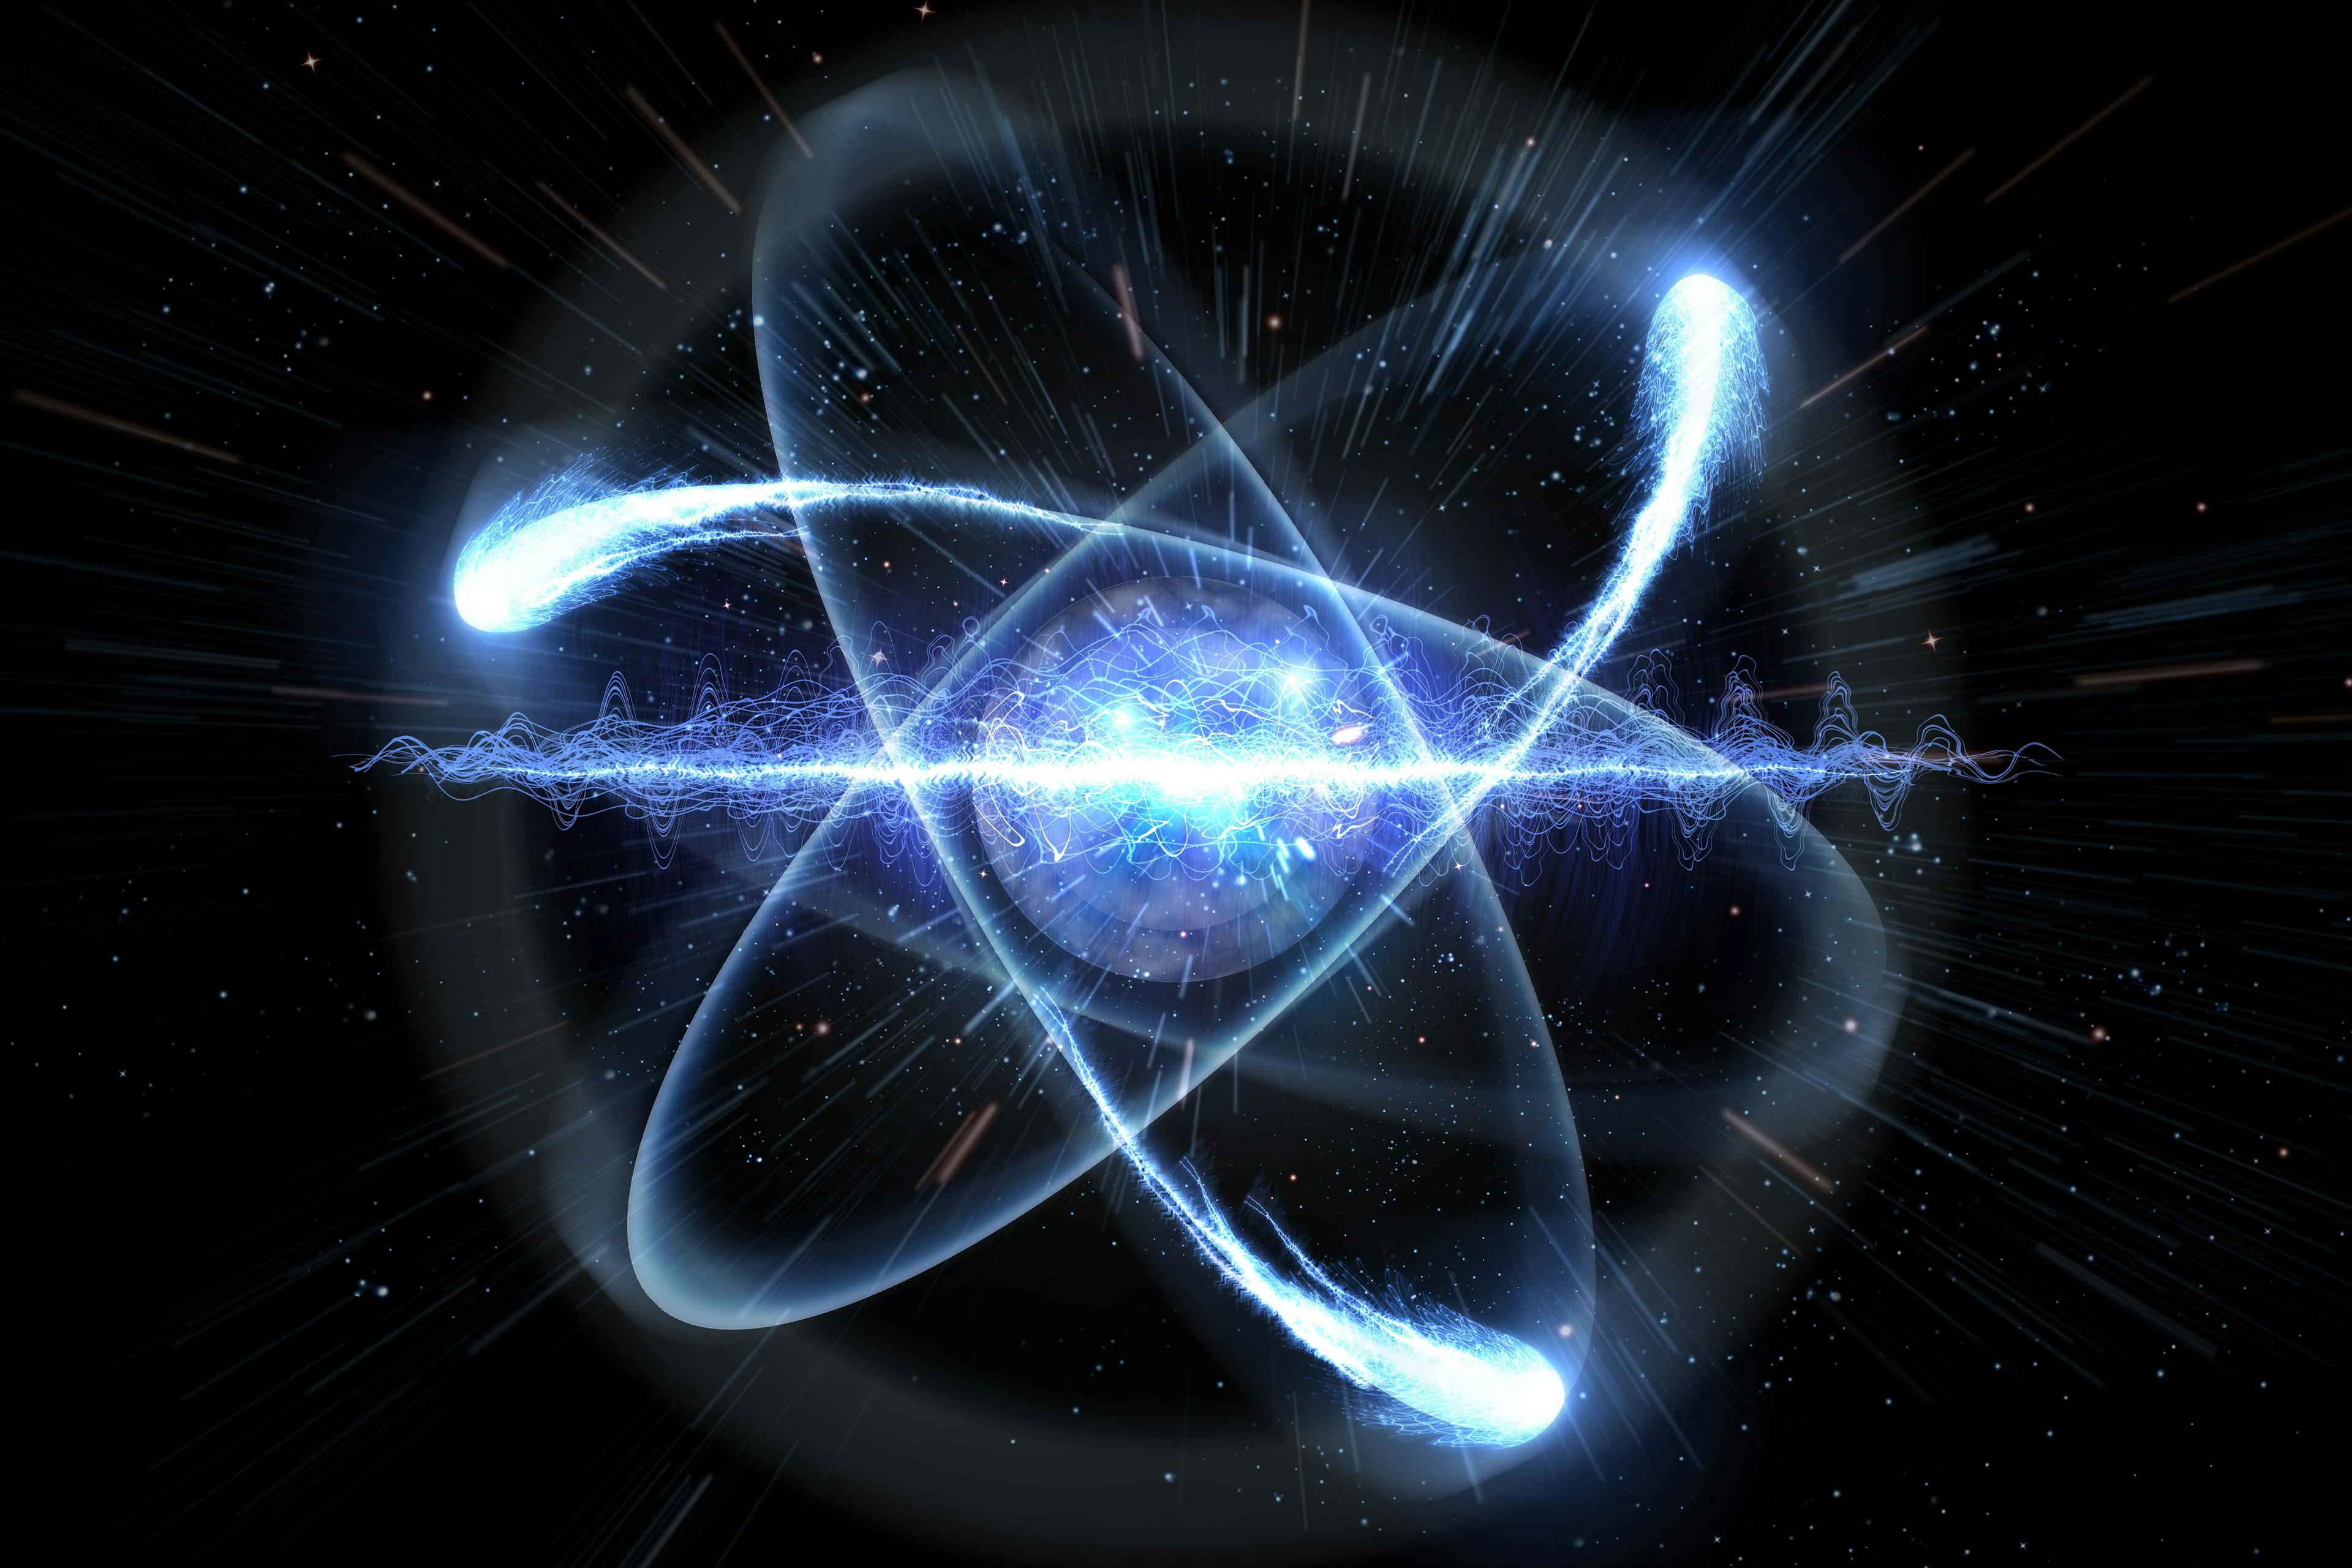 Atomic Particle 3D Illustration | Image Credit: © Ezume Images - stock.adobe.com